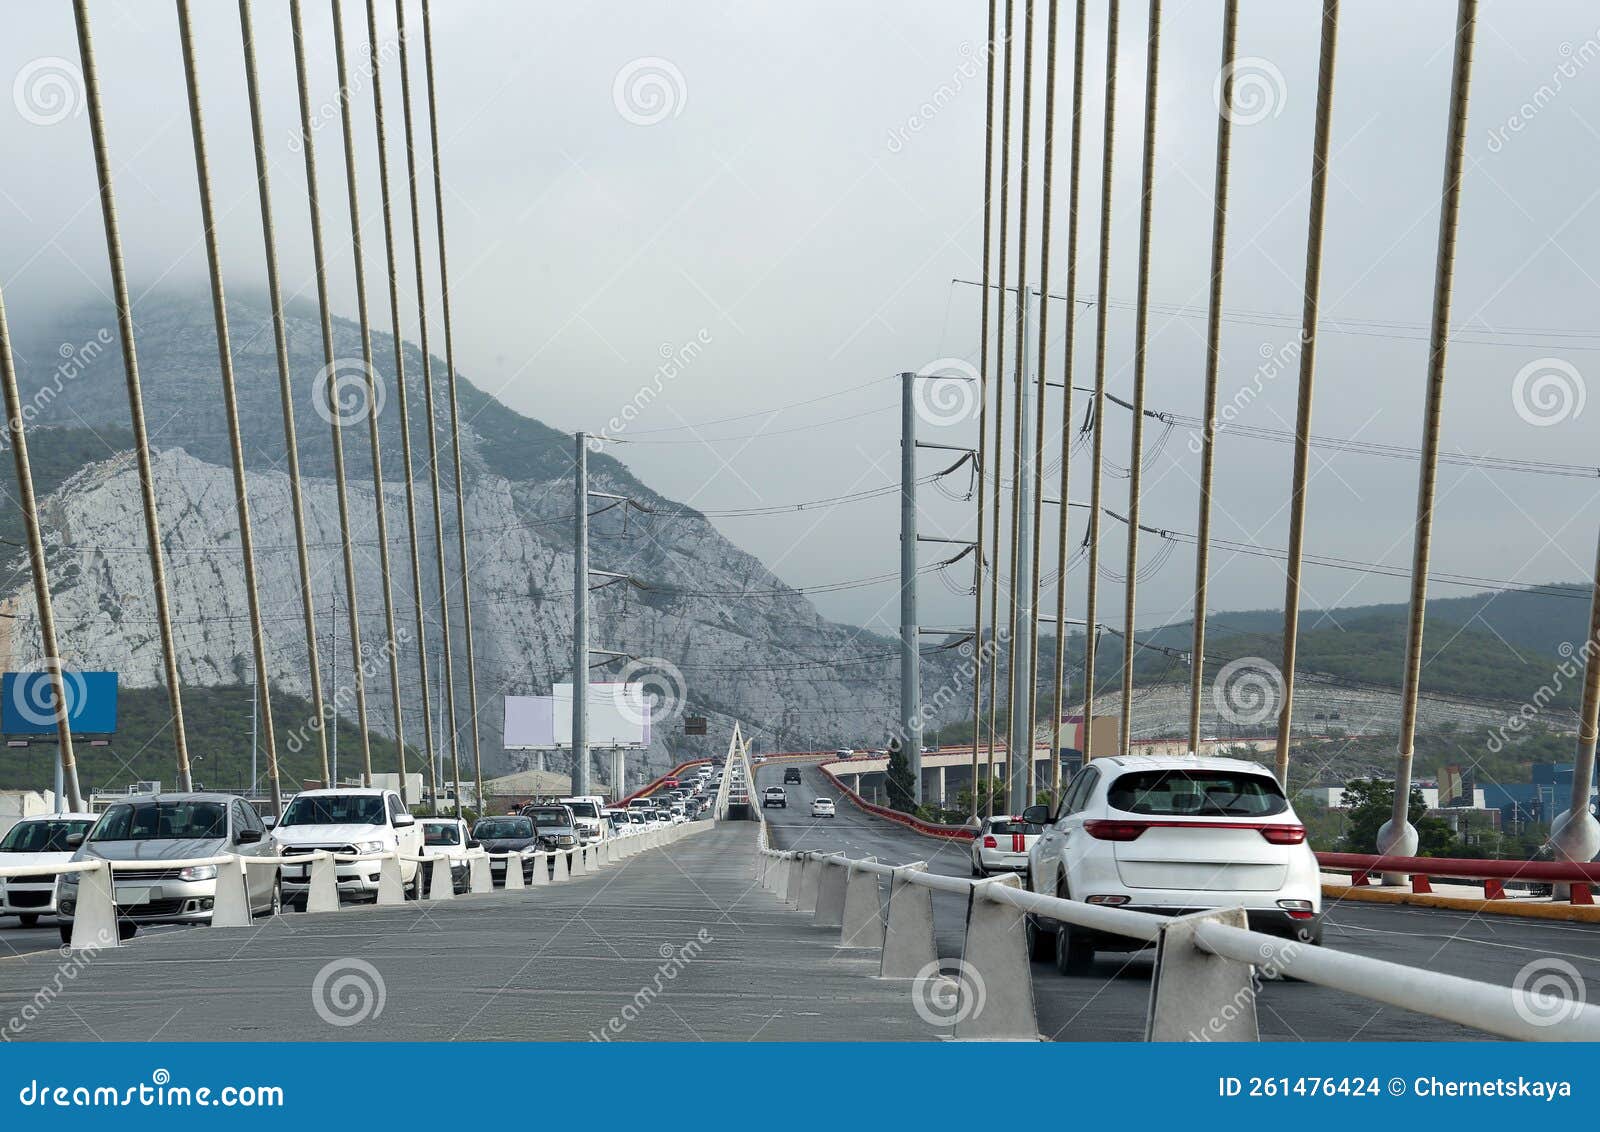 view of cars on modern bridge near mountain